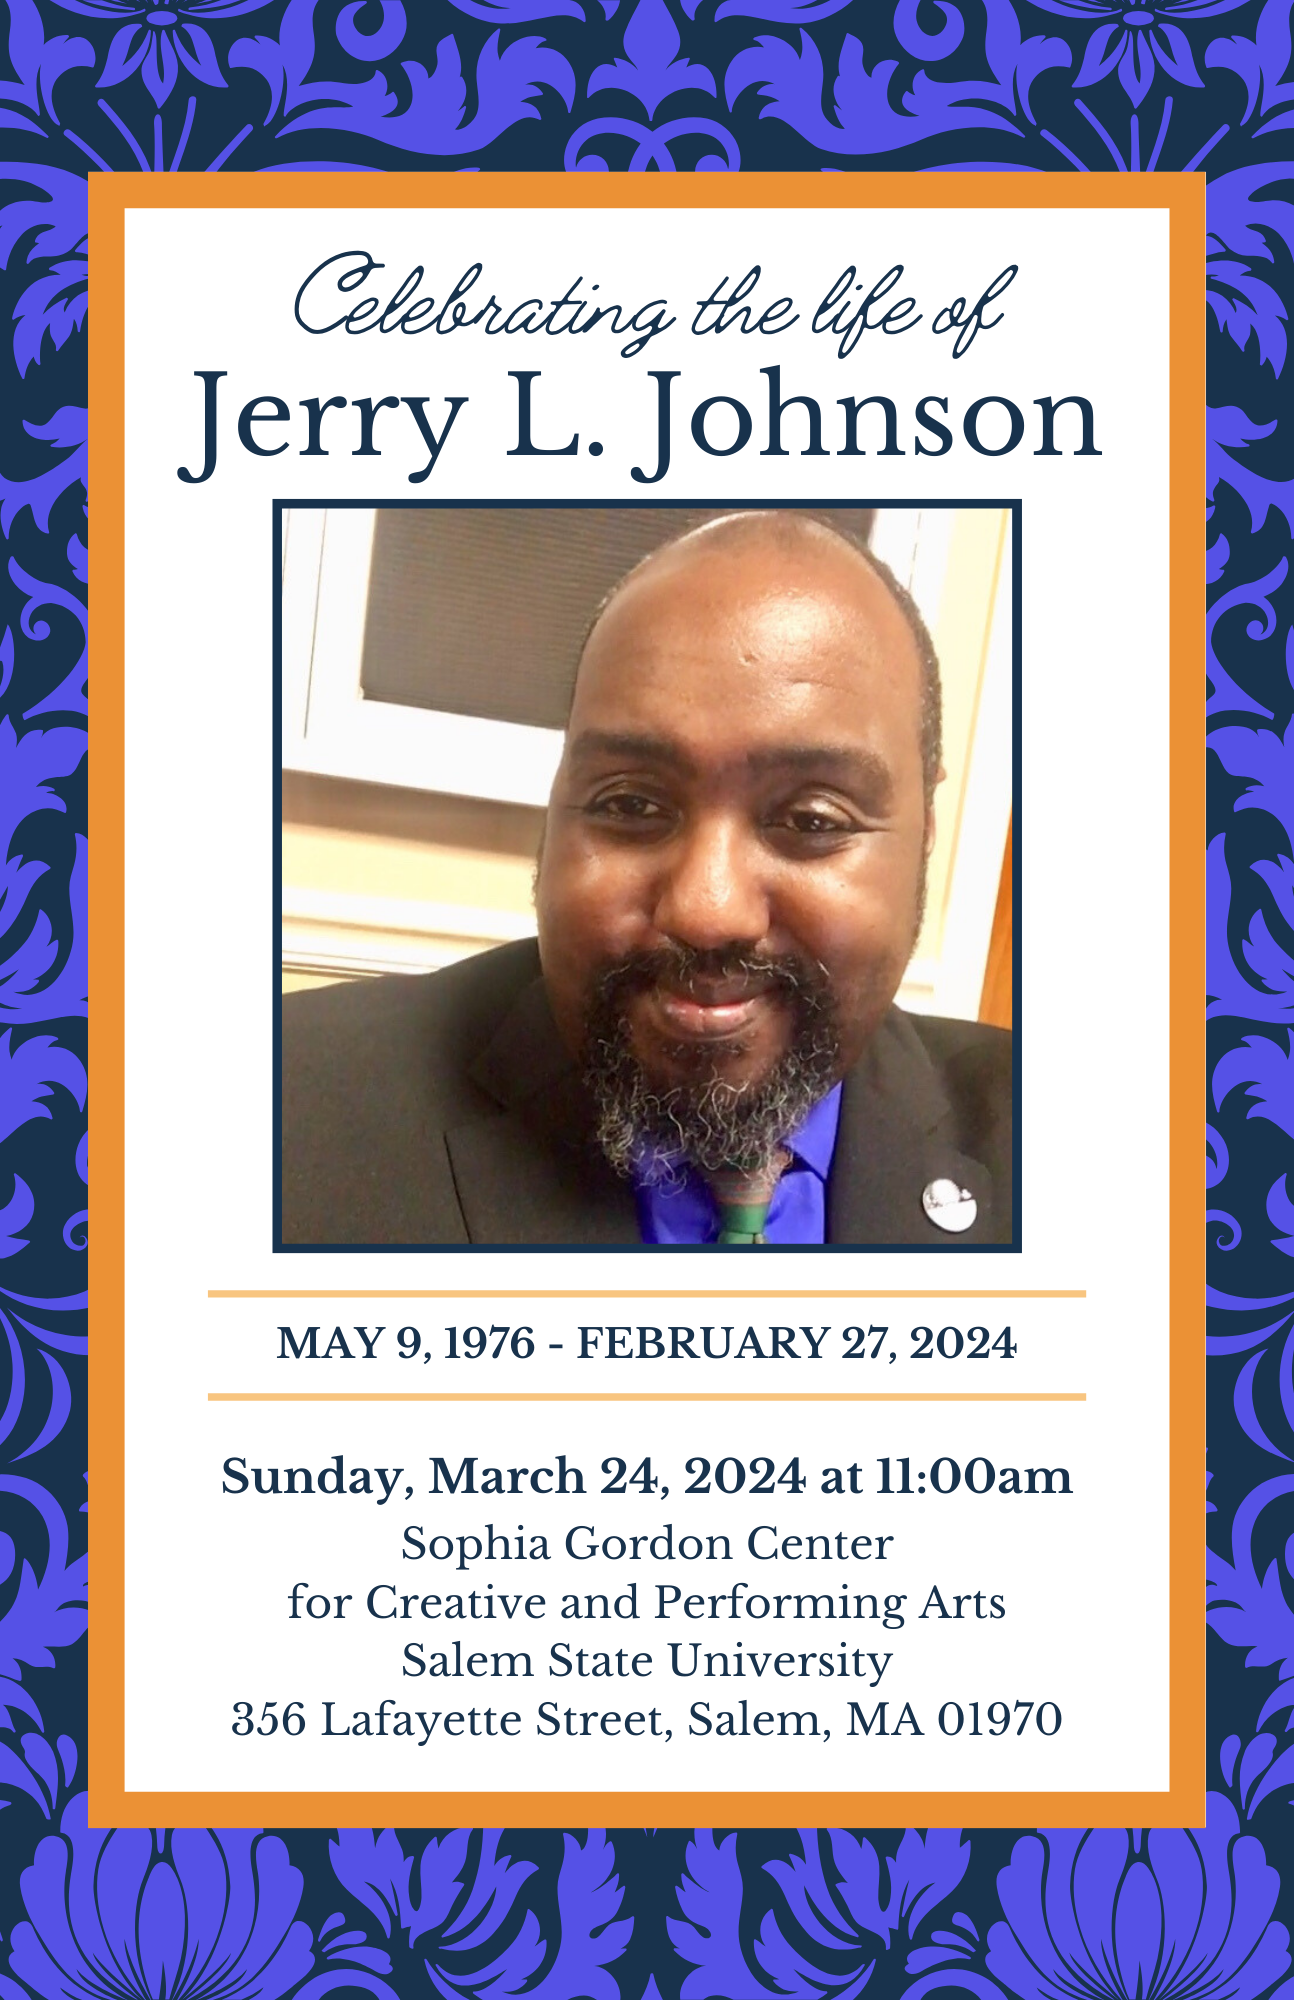 Celebrating the Life of Jerry L. Johnson (May 9, 1976 - February 27, 2024)